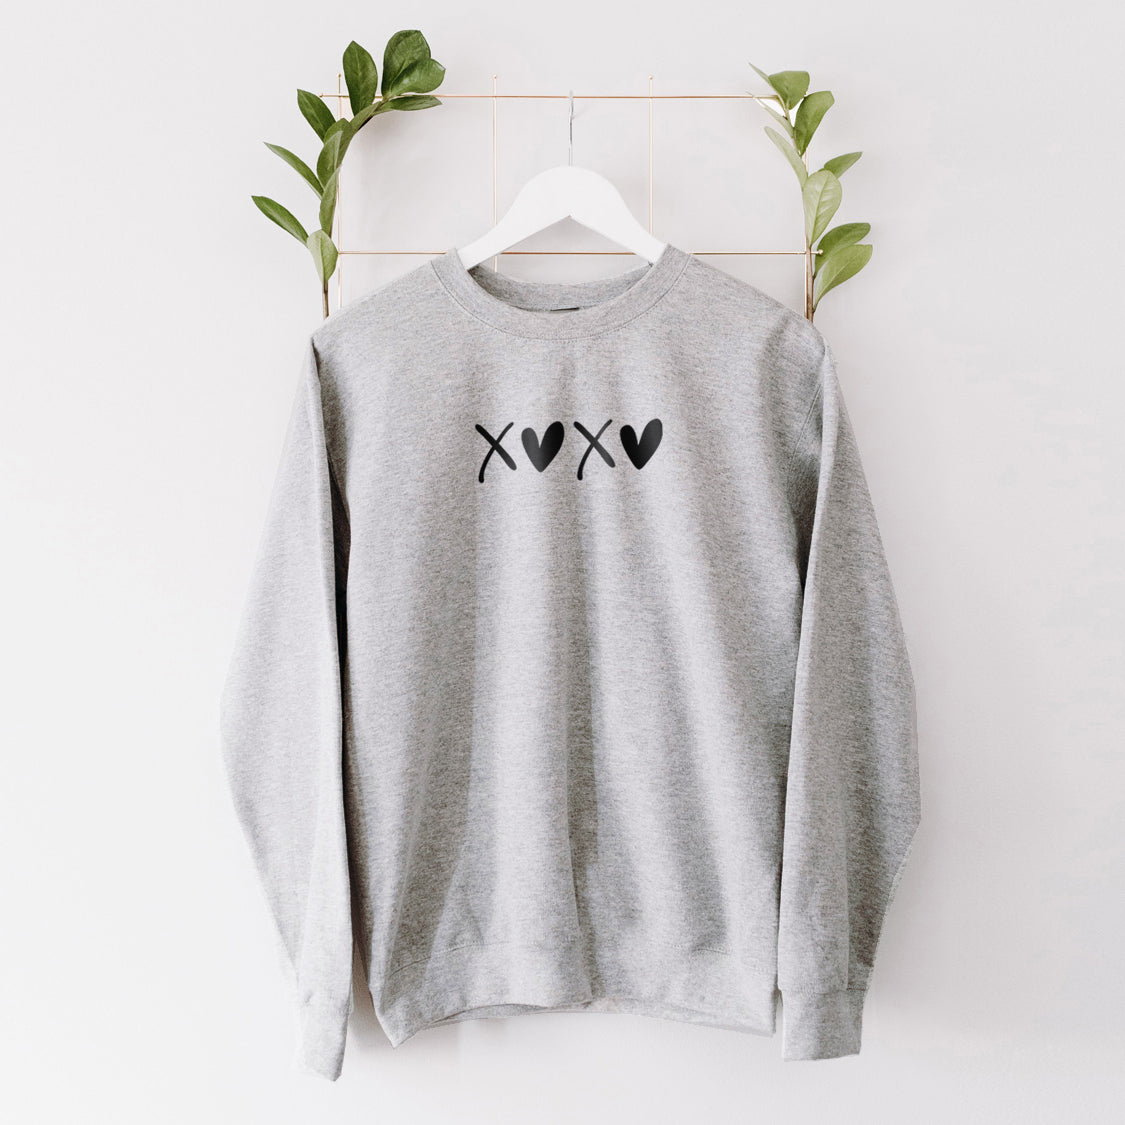 XOXO Sweatshirt - Love Minimal Design Printed Sweatshirt